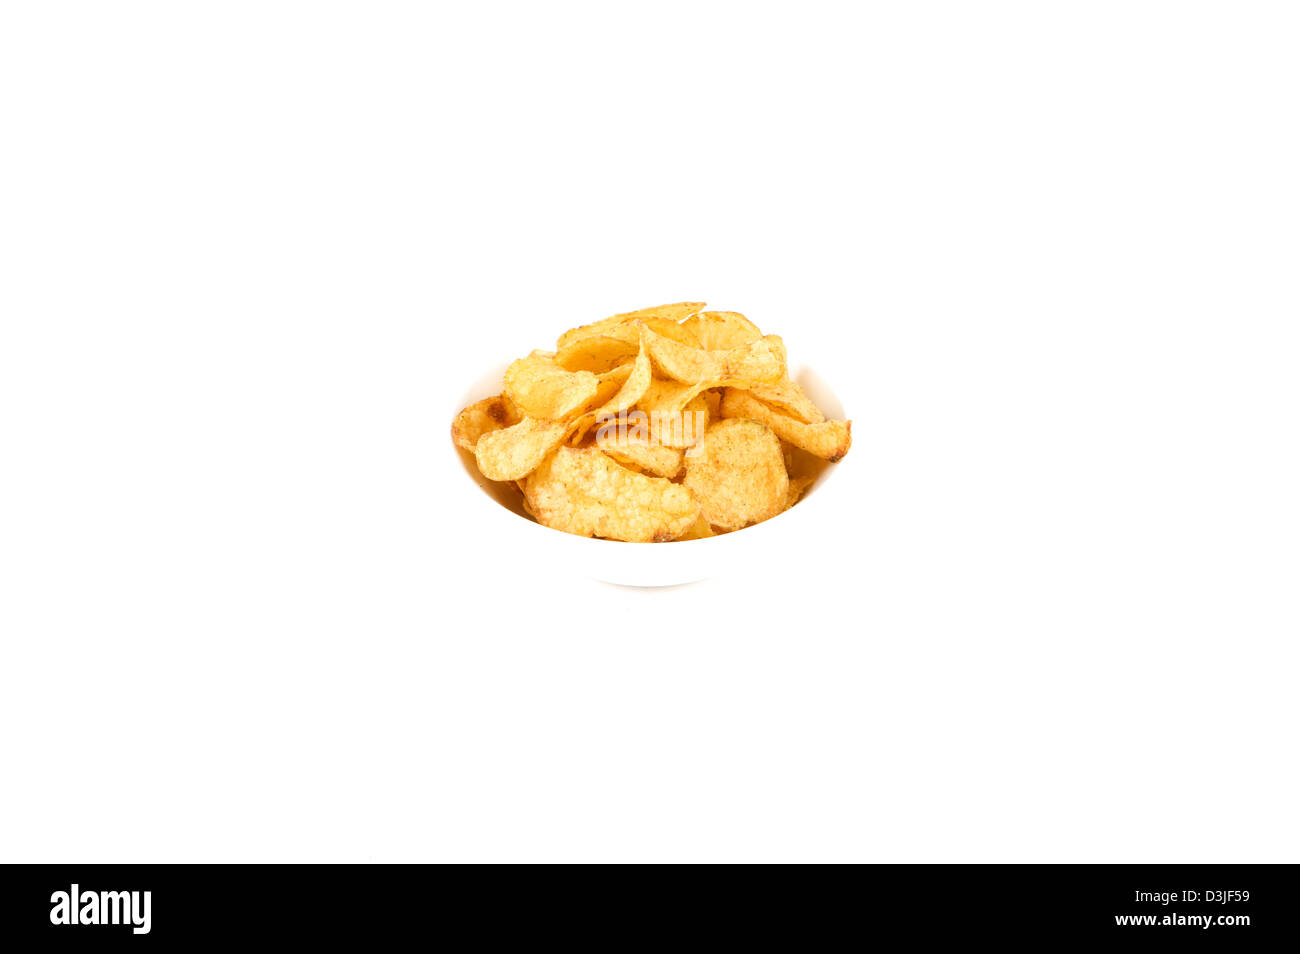 Handcut Potato chips or crisps Stock Photo